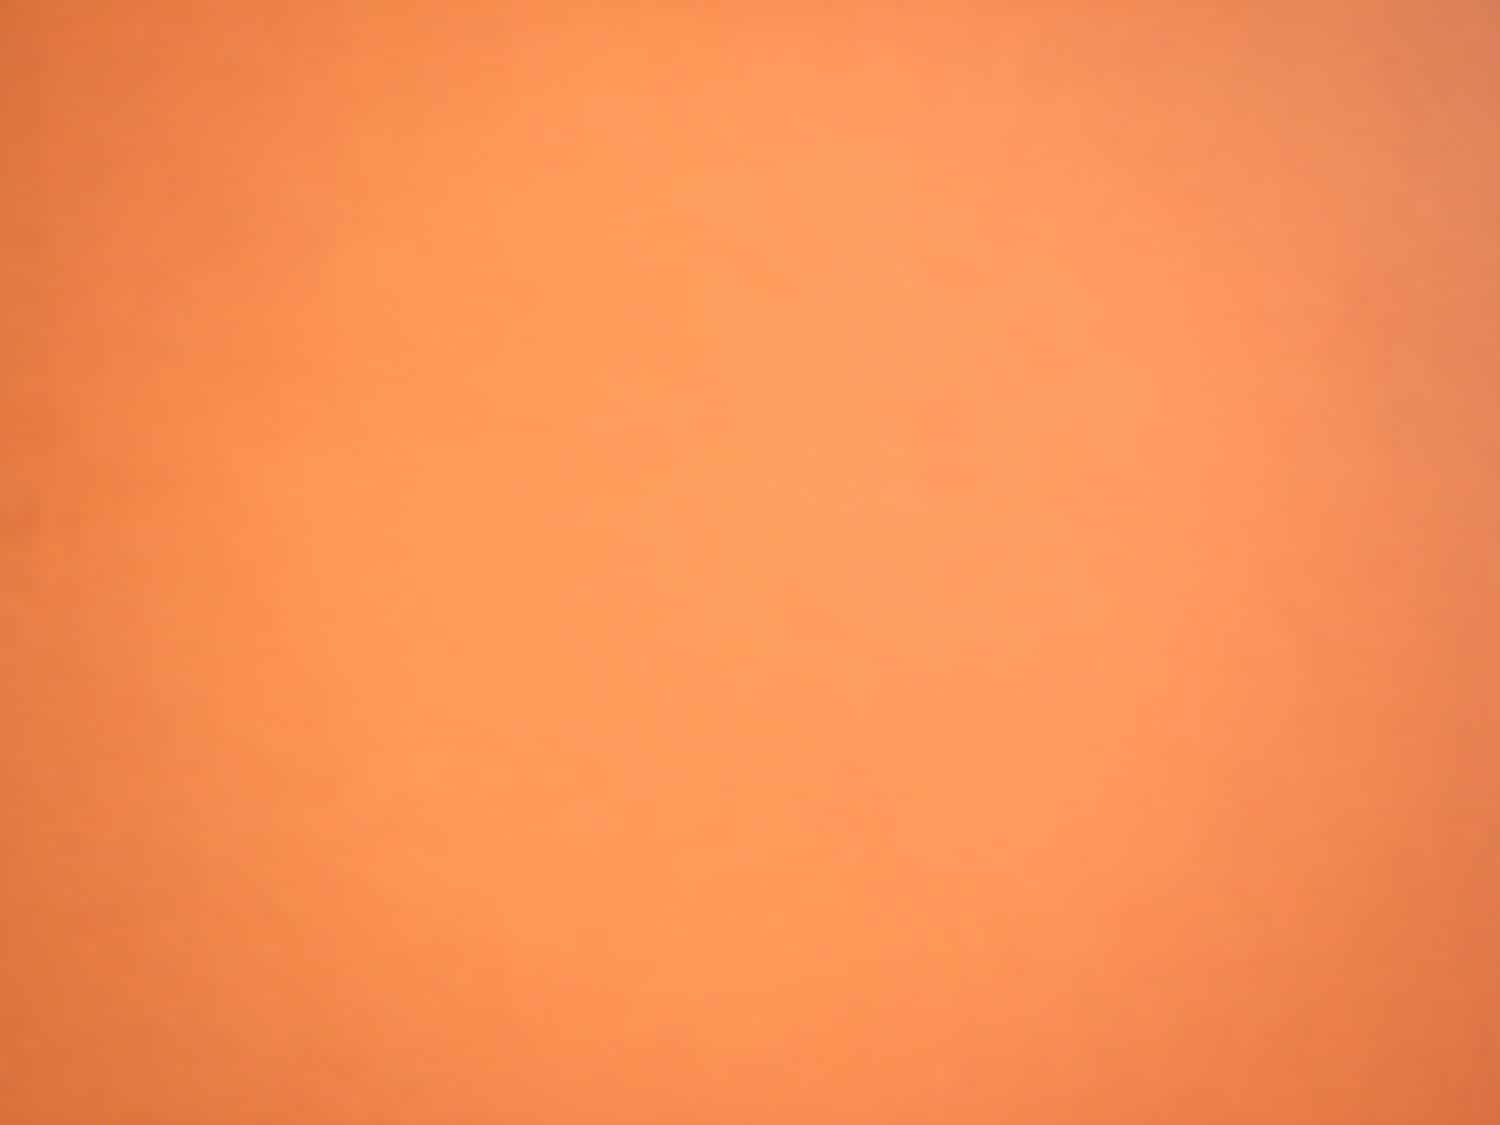 Blur Atomic Tangerine orange color background